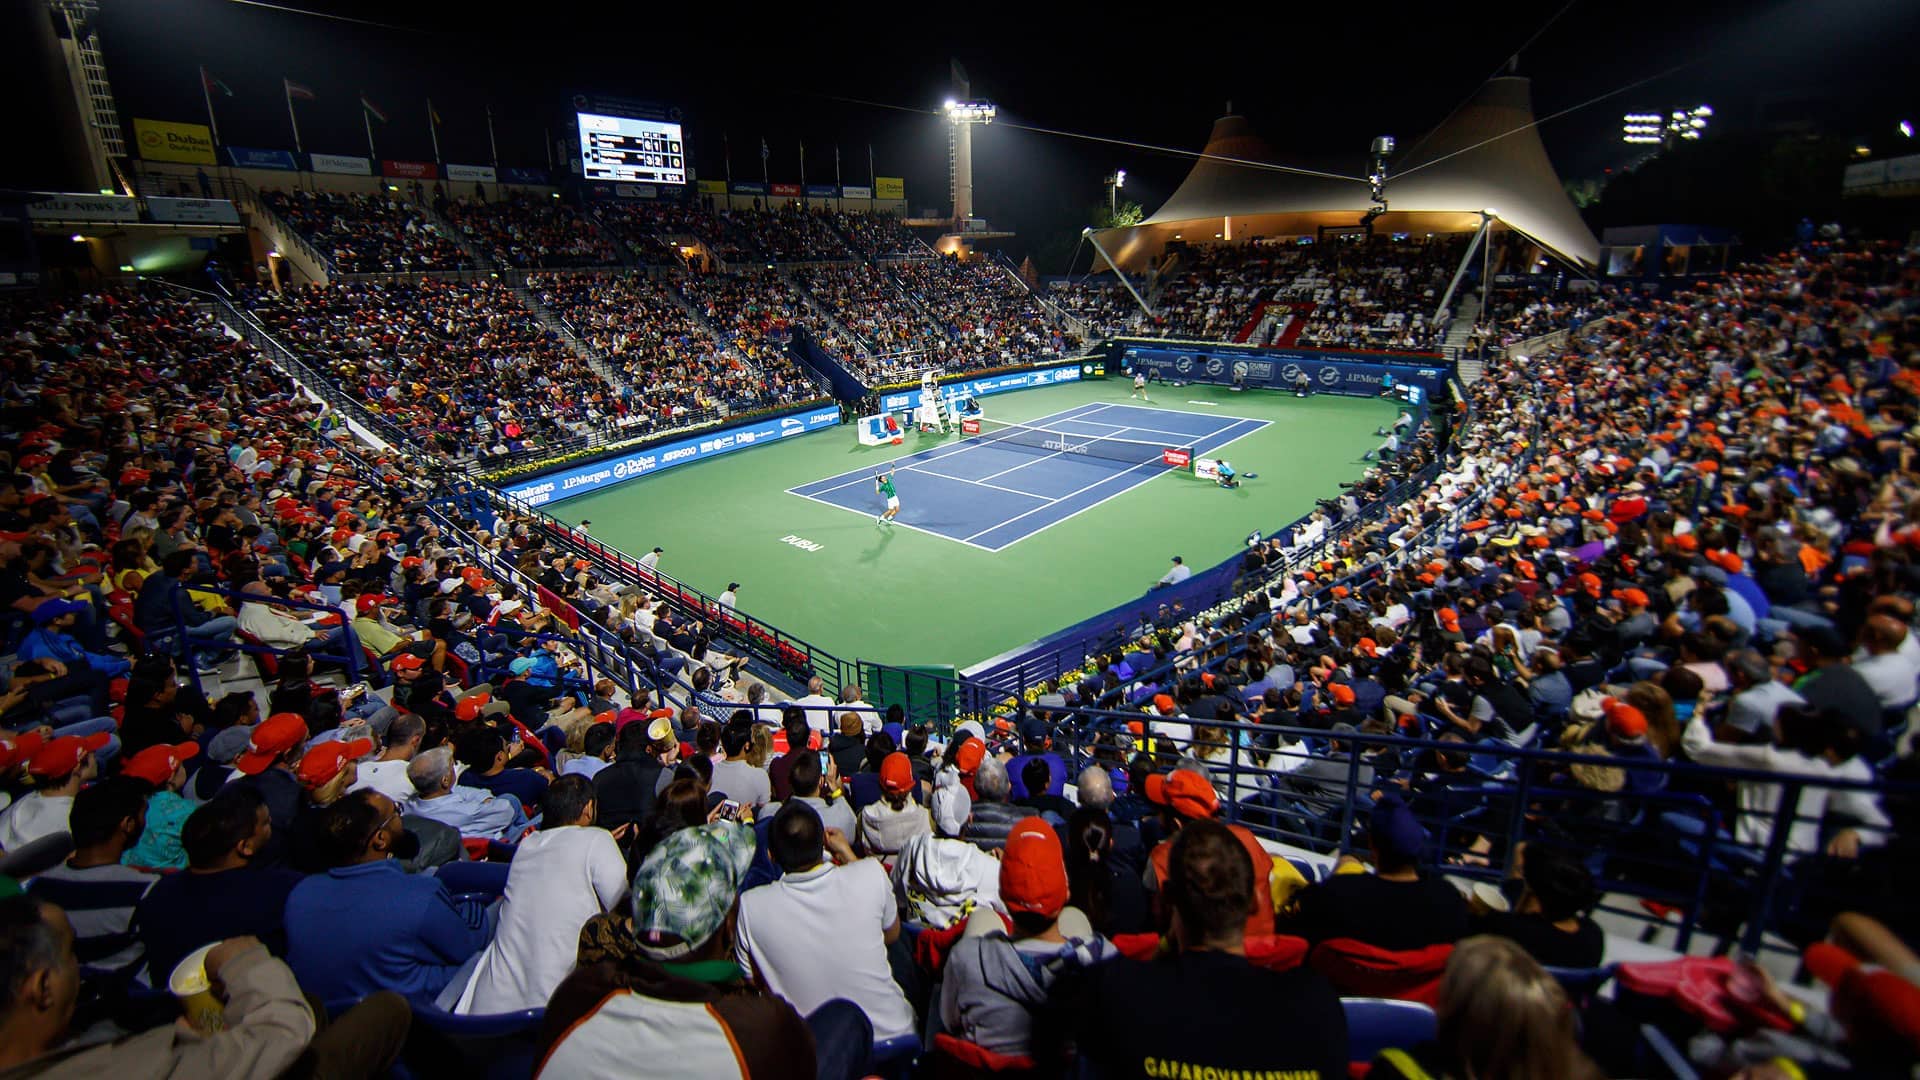 Stadium - Dubai Duty Free Tennis Championships